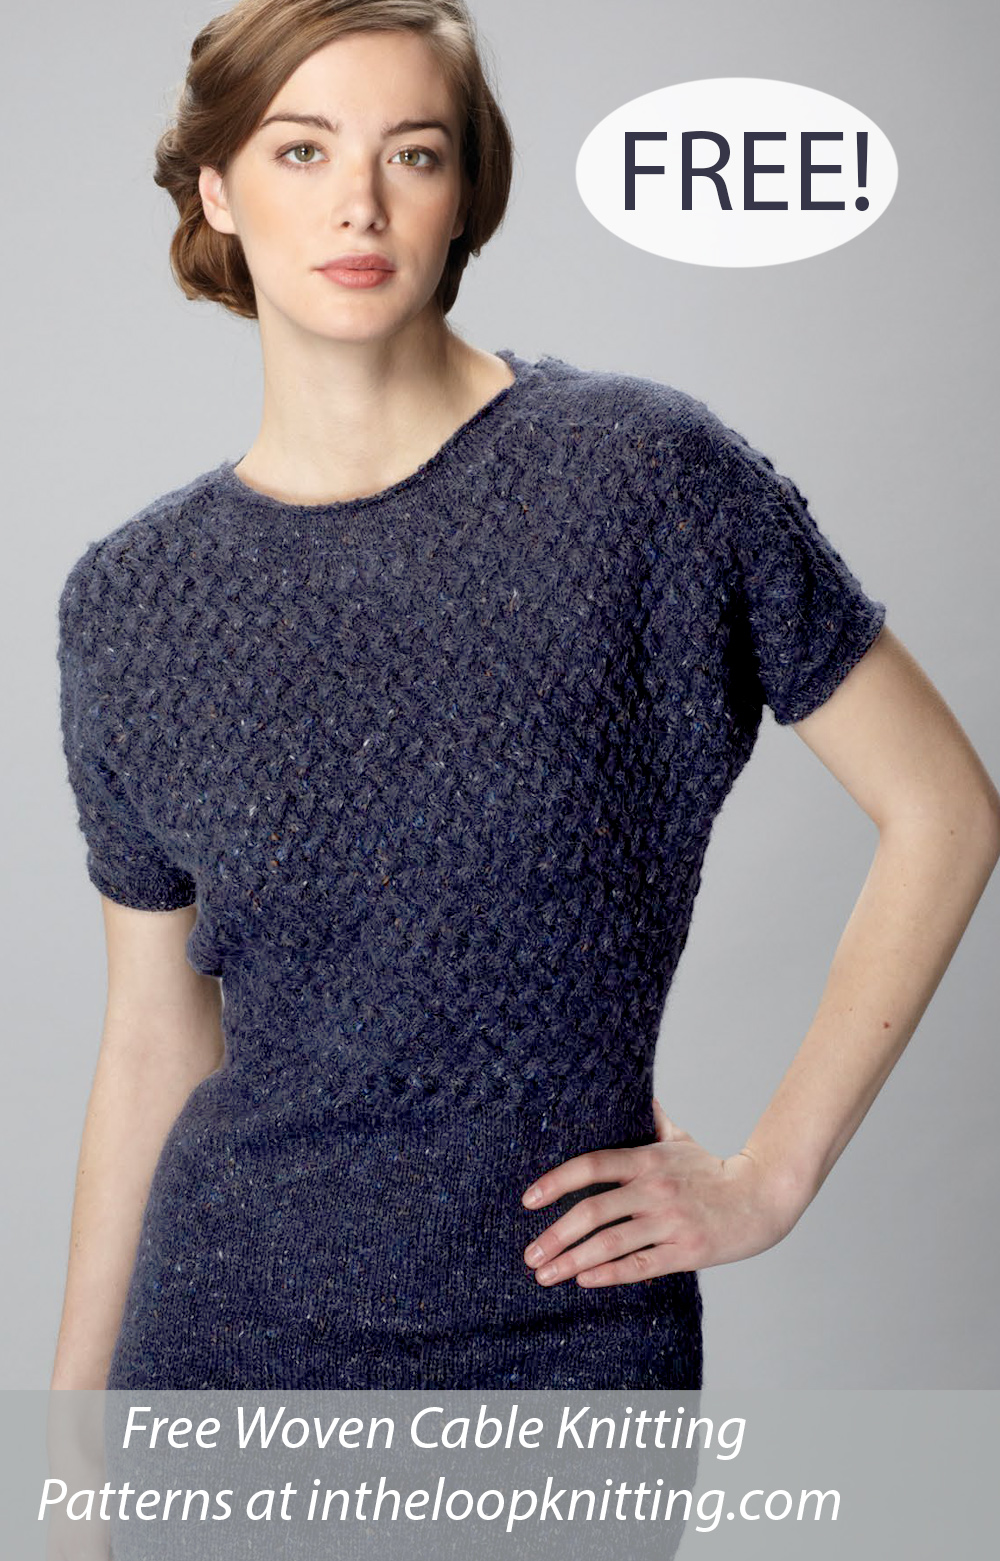 Free knitting pattern for award-winning Tunic Dress from Rowan